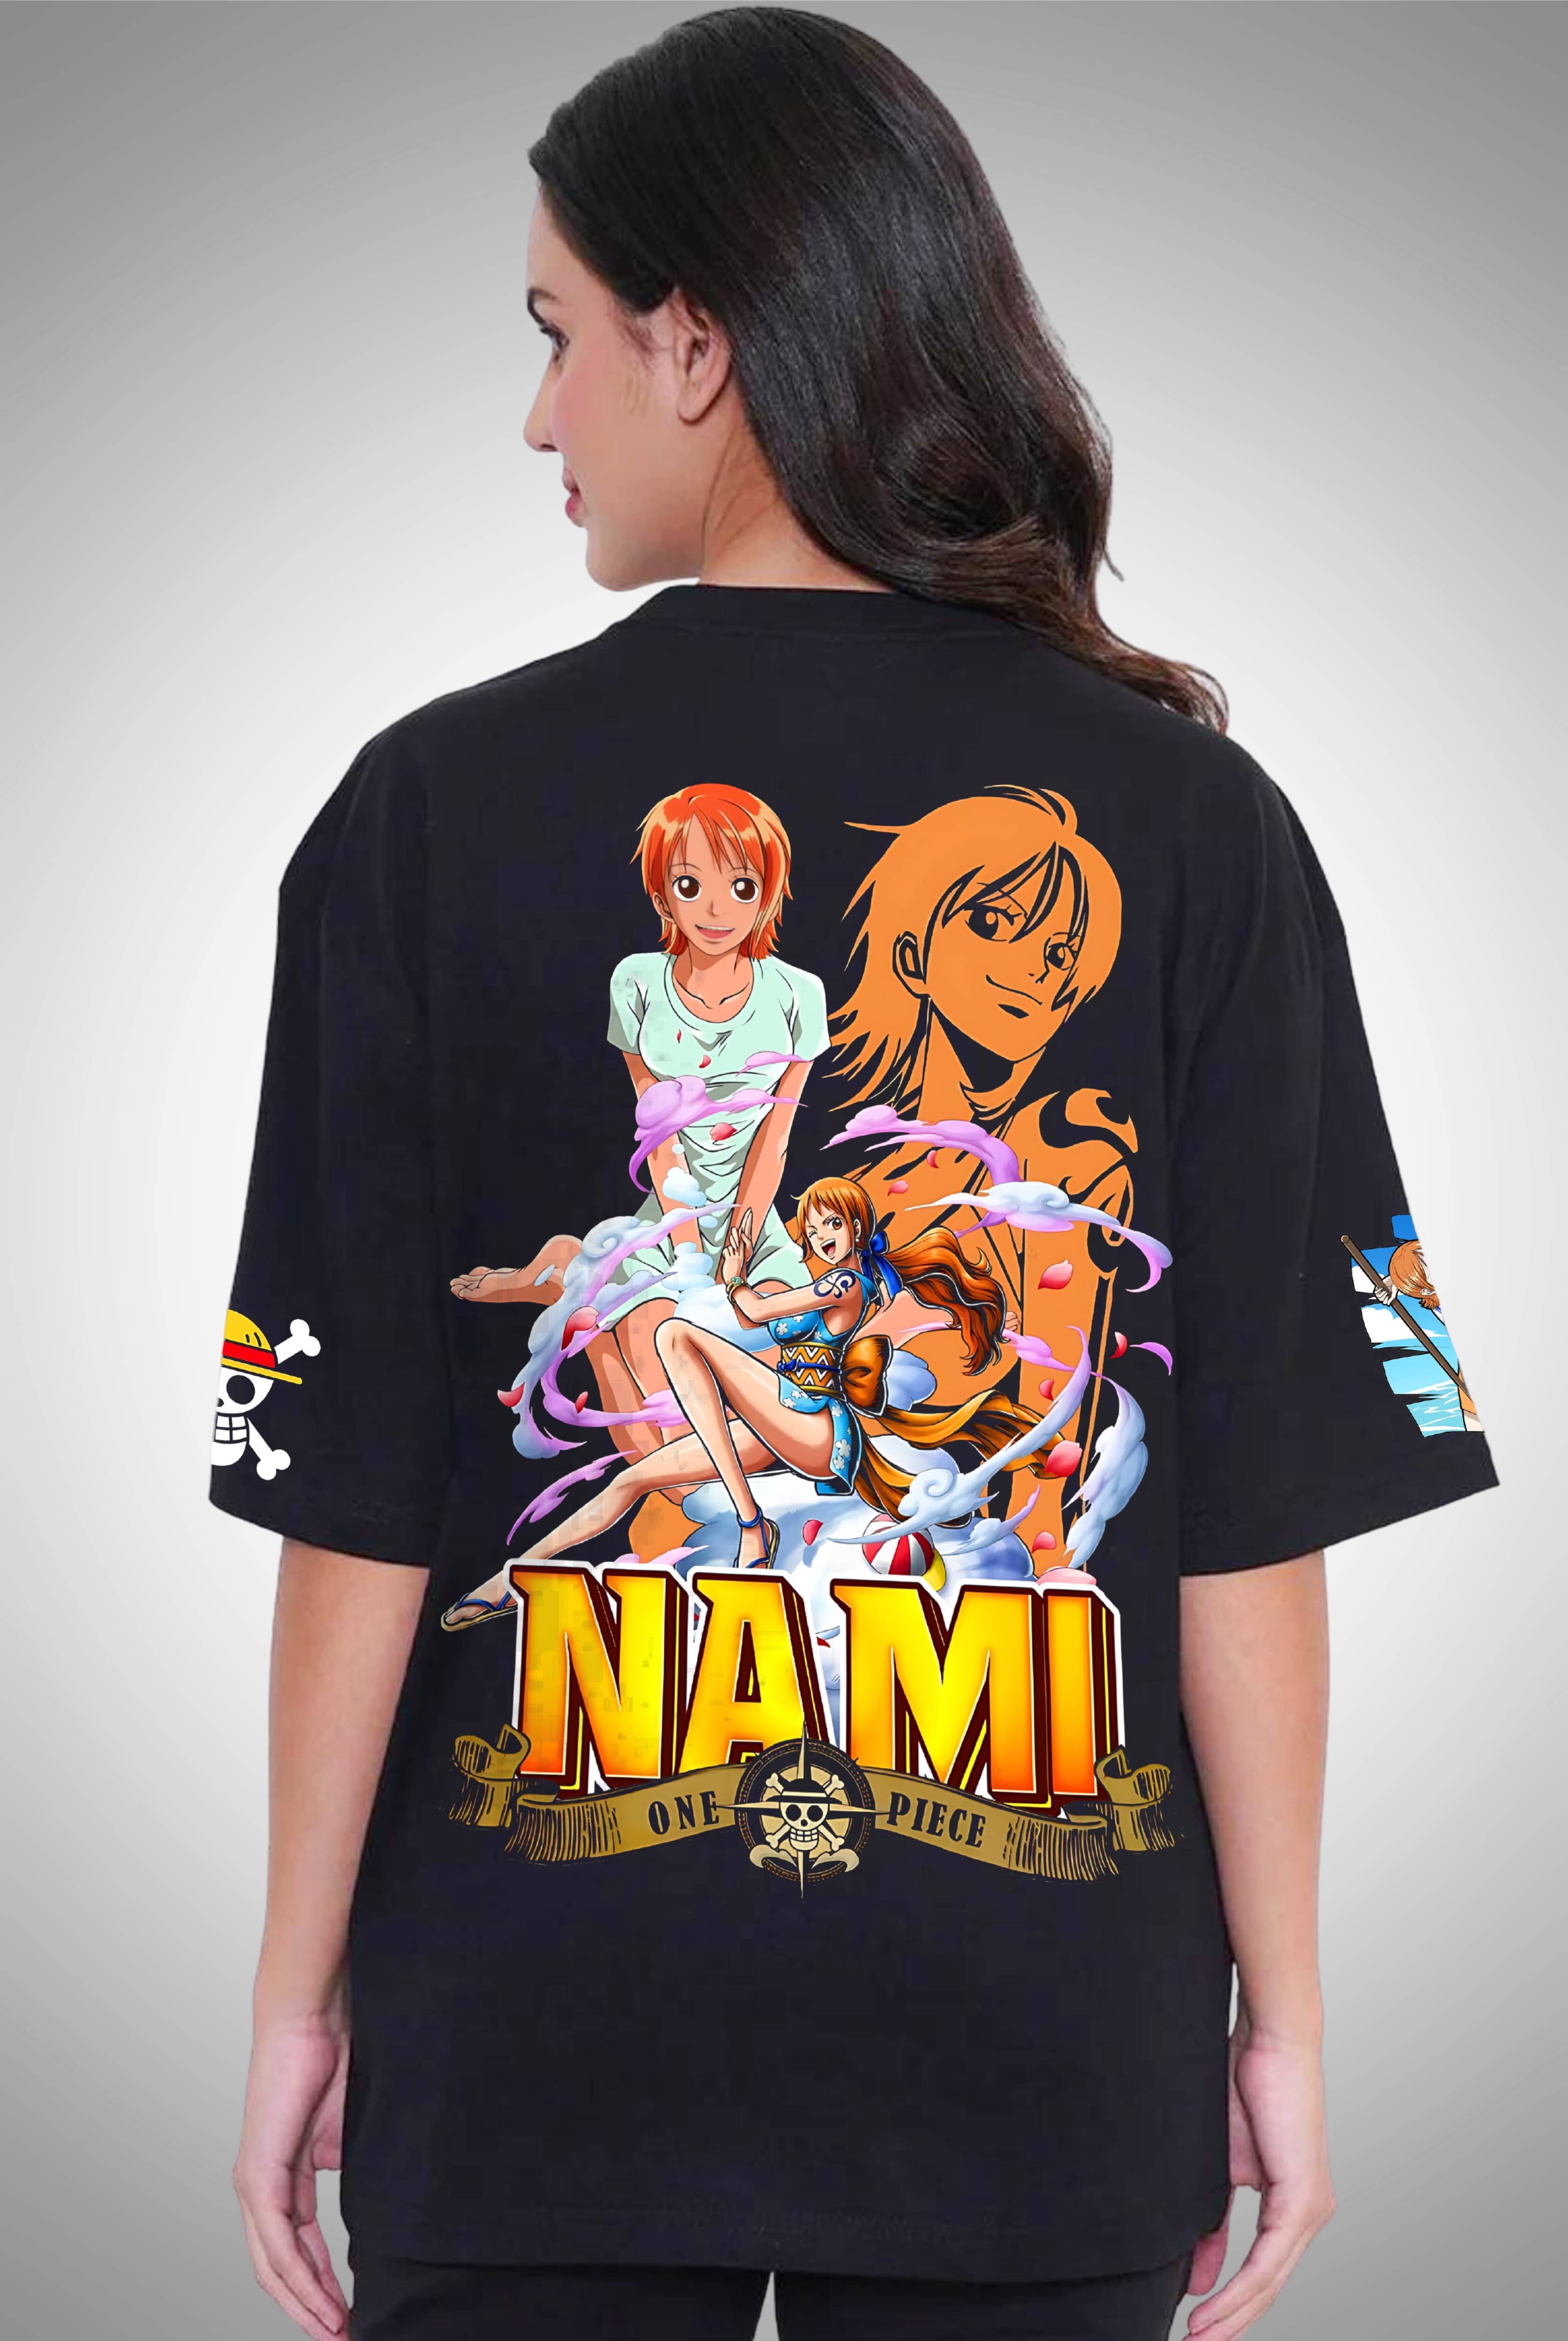 Nami One Piece Women's Oversized Anime T-Shirt